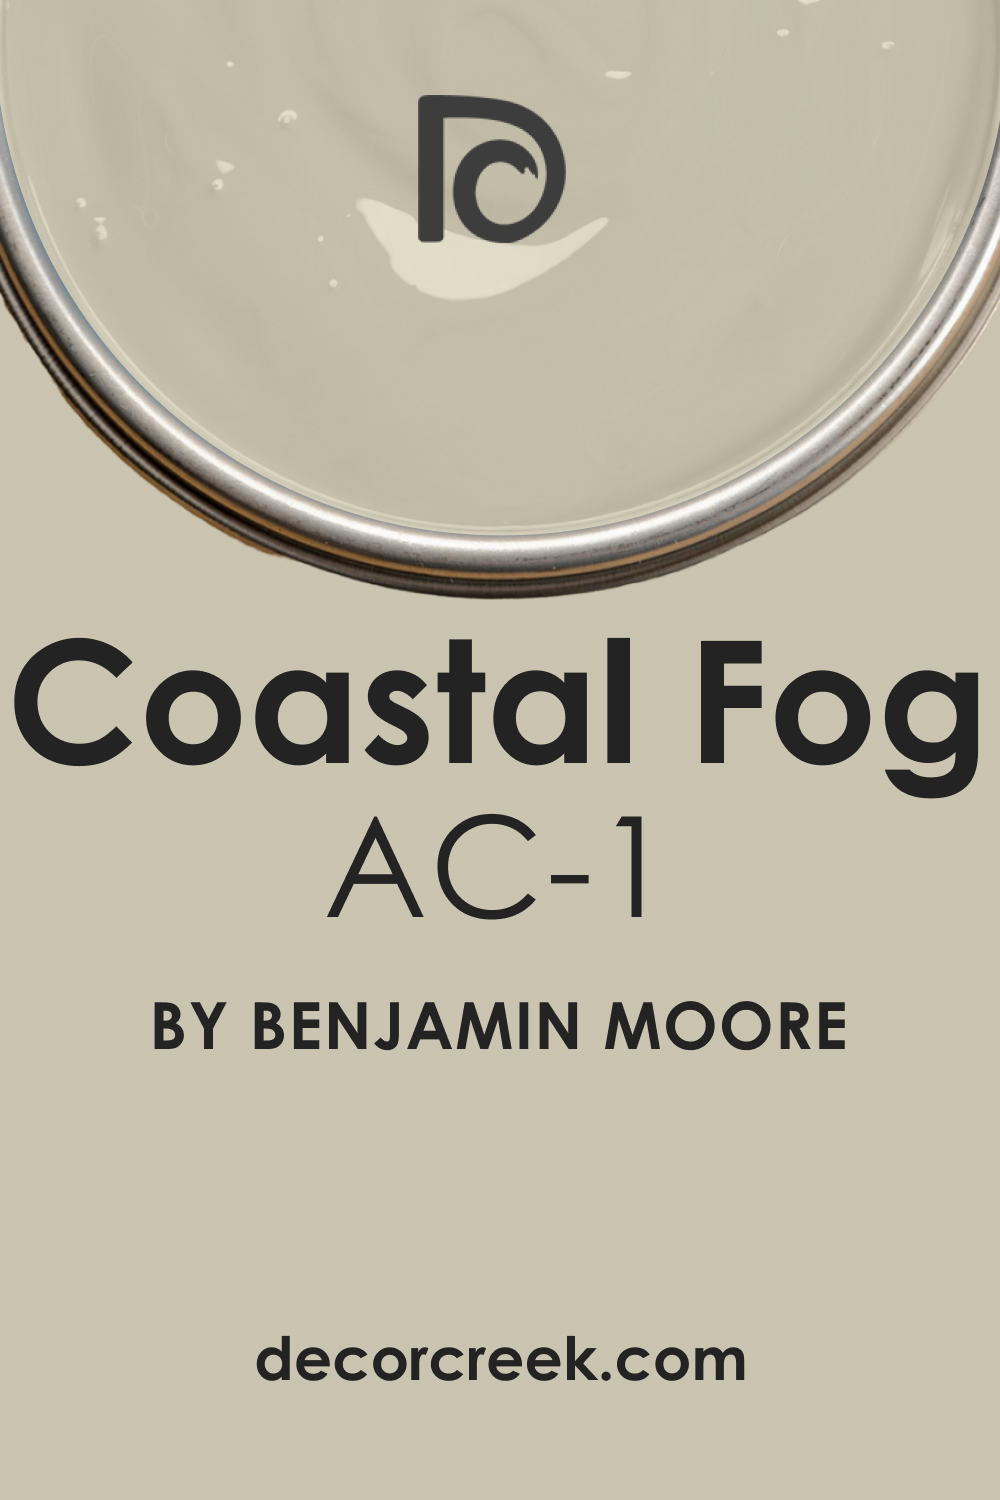 What Color Is Coastal Fog AC-1?